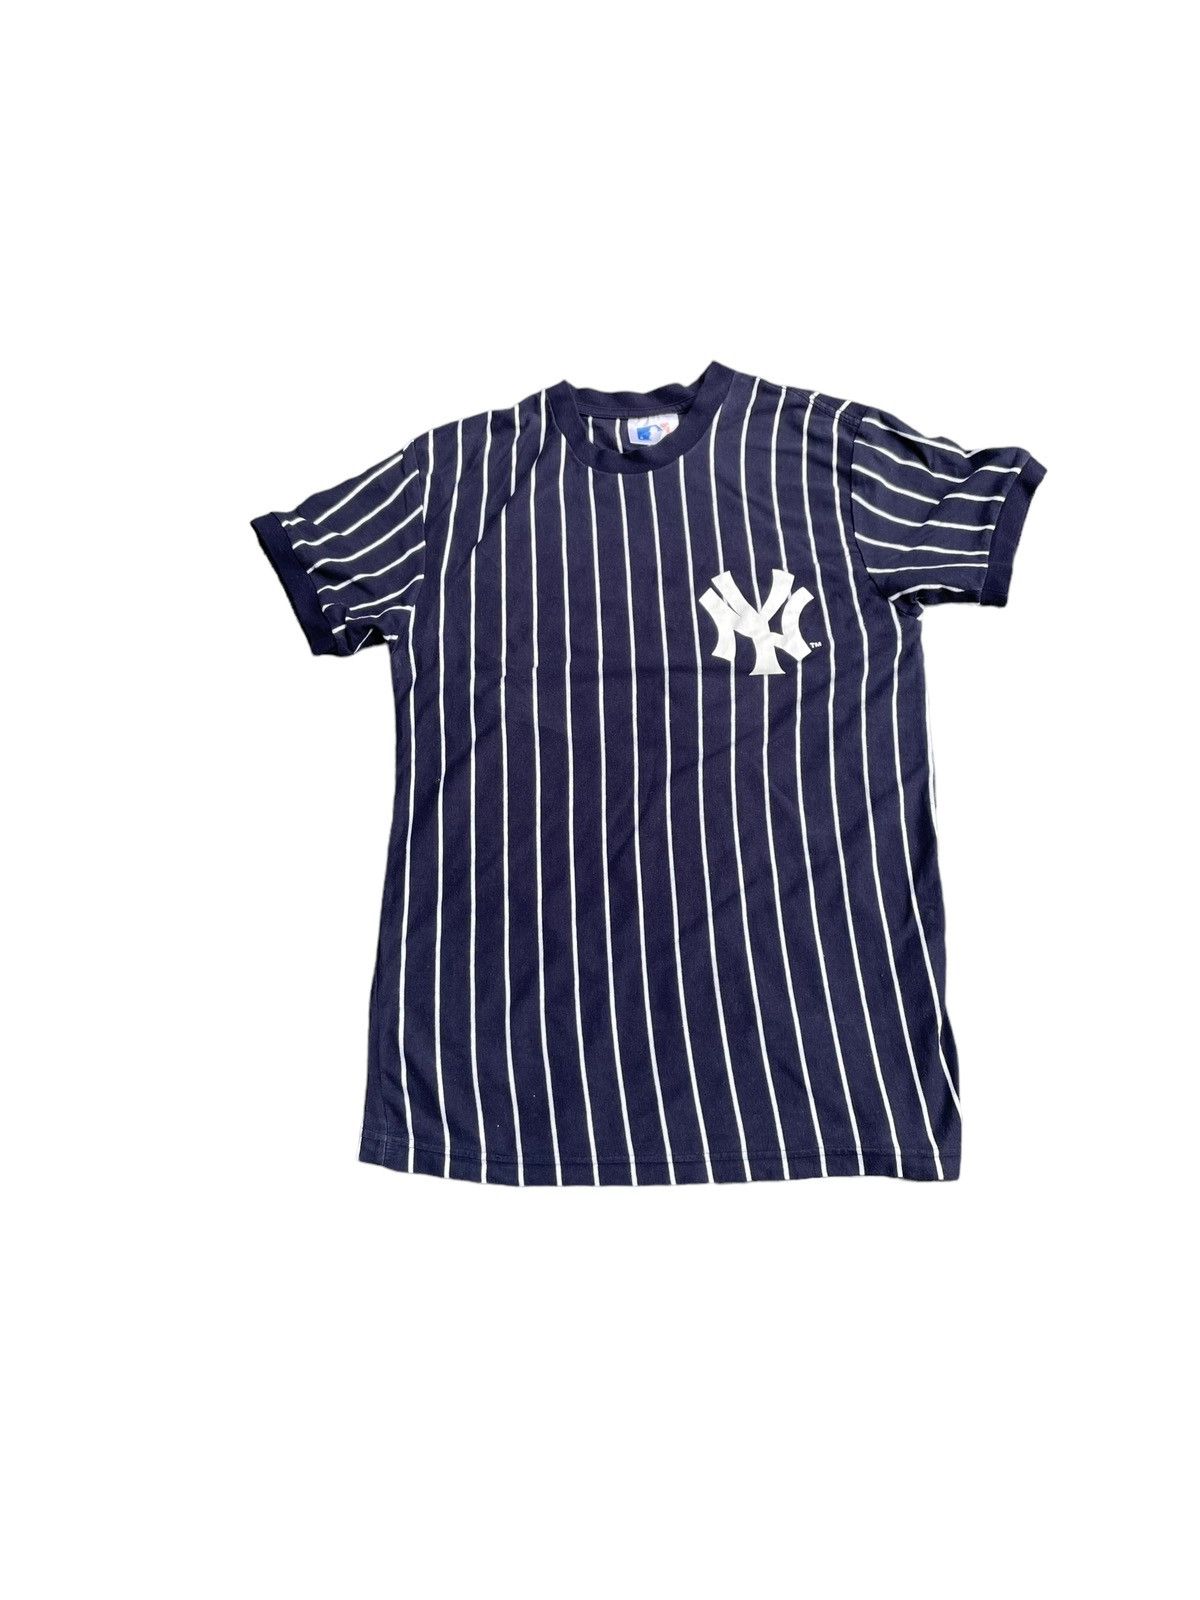 Sportswear New York Yankees Hideki Matsui Tshirt